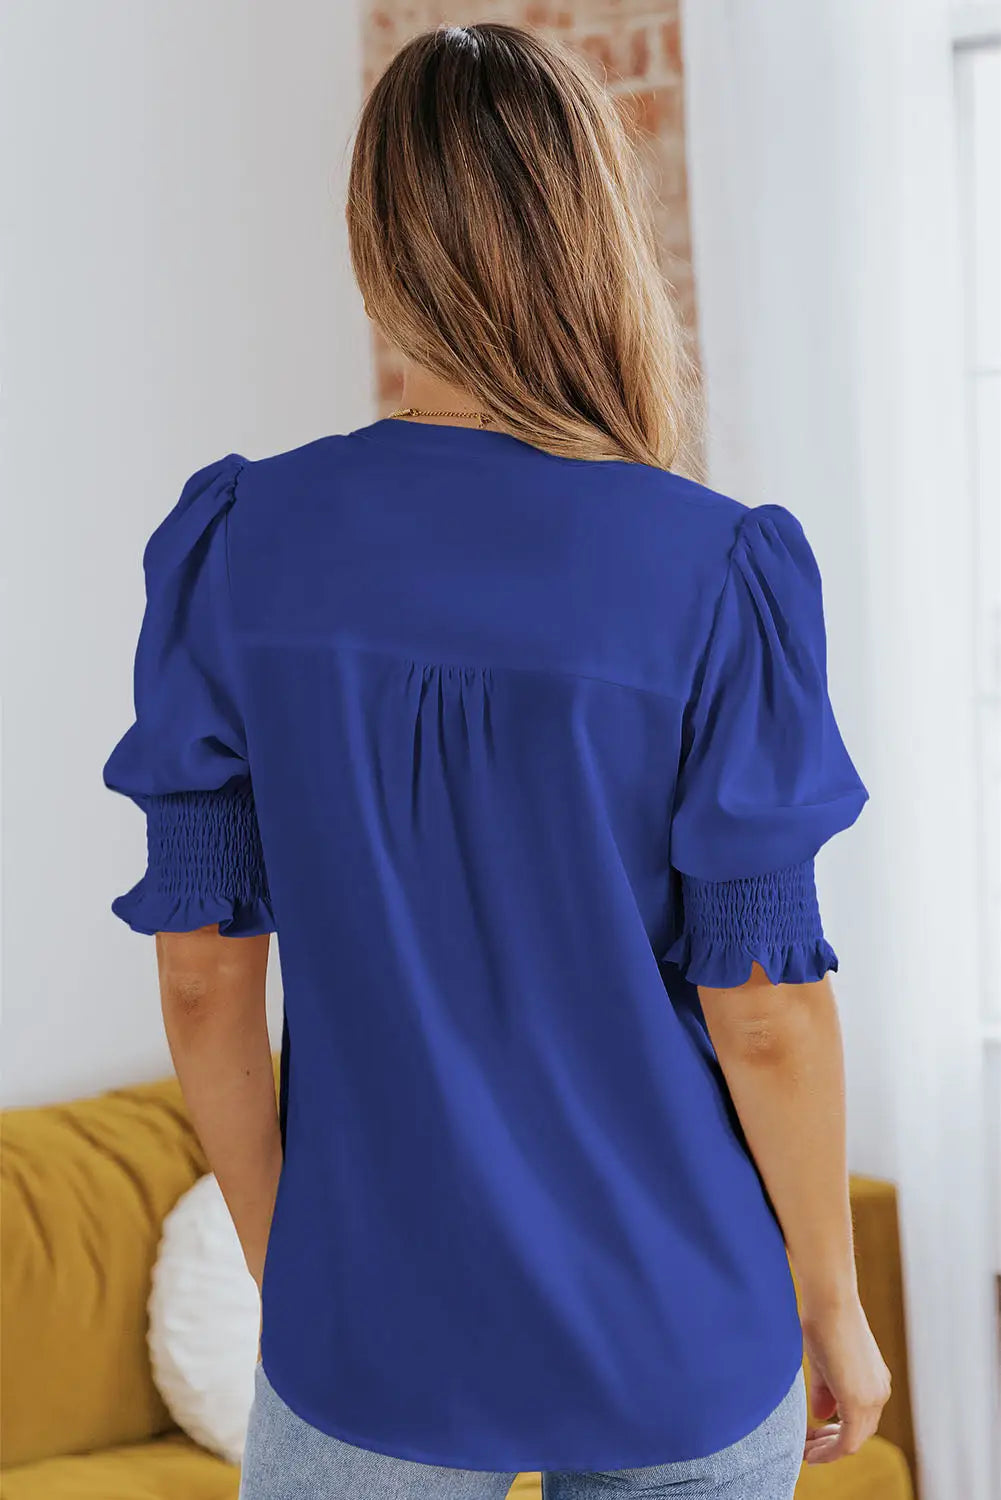 Purple solid color half sleeve v neck blouse - tops